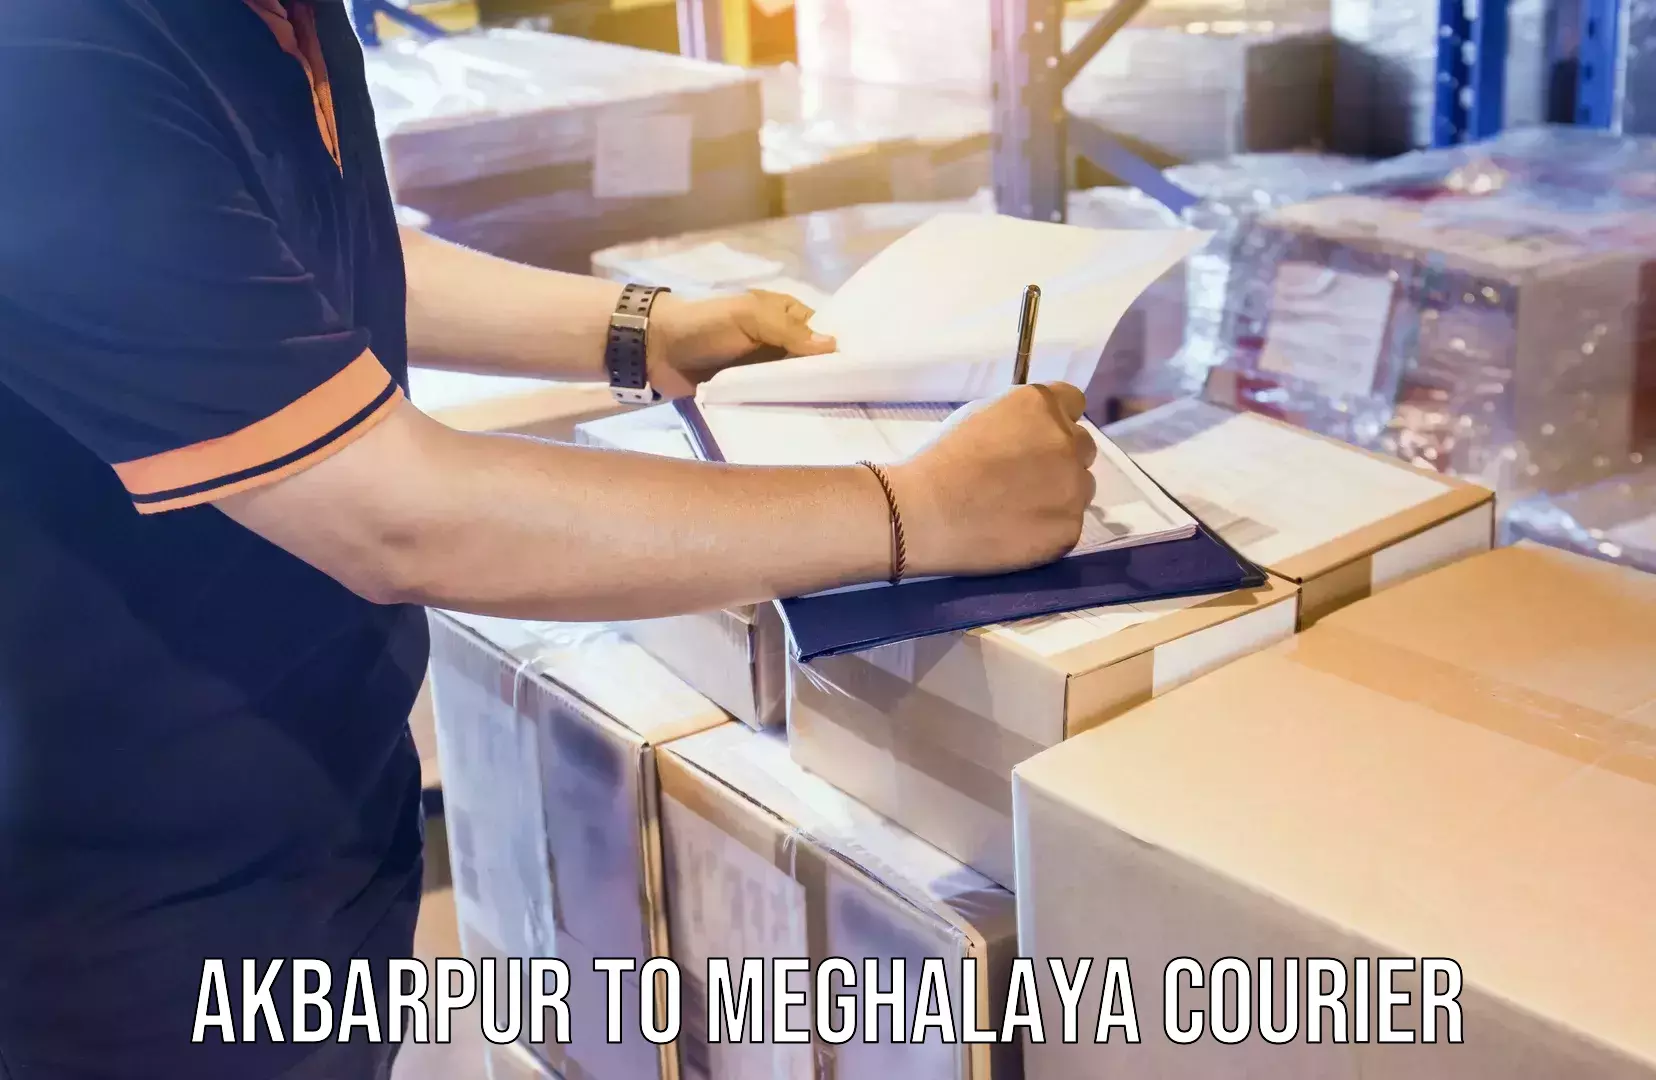 Courier service partnerships Akbarpur to Meghalaya